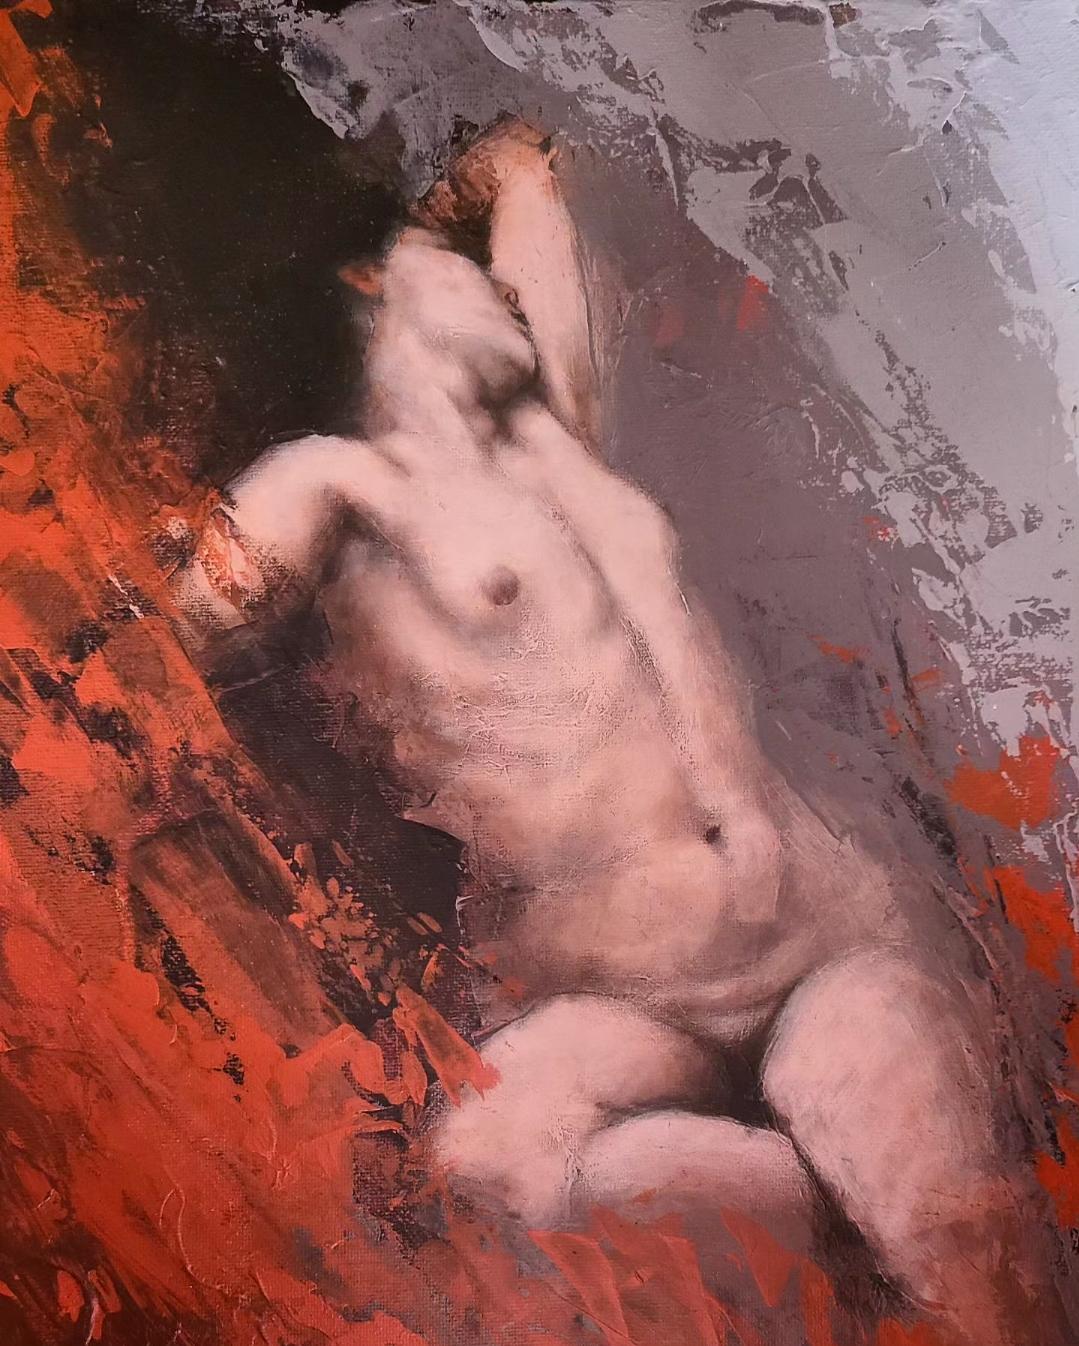 Louis Braquet Portrait Painting - "Tempestas" - Contemporary Nude Figurative Painting